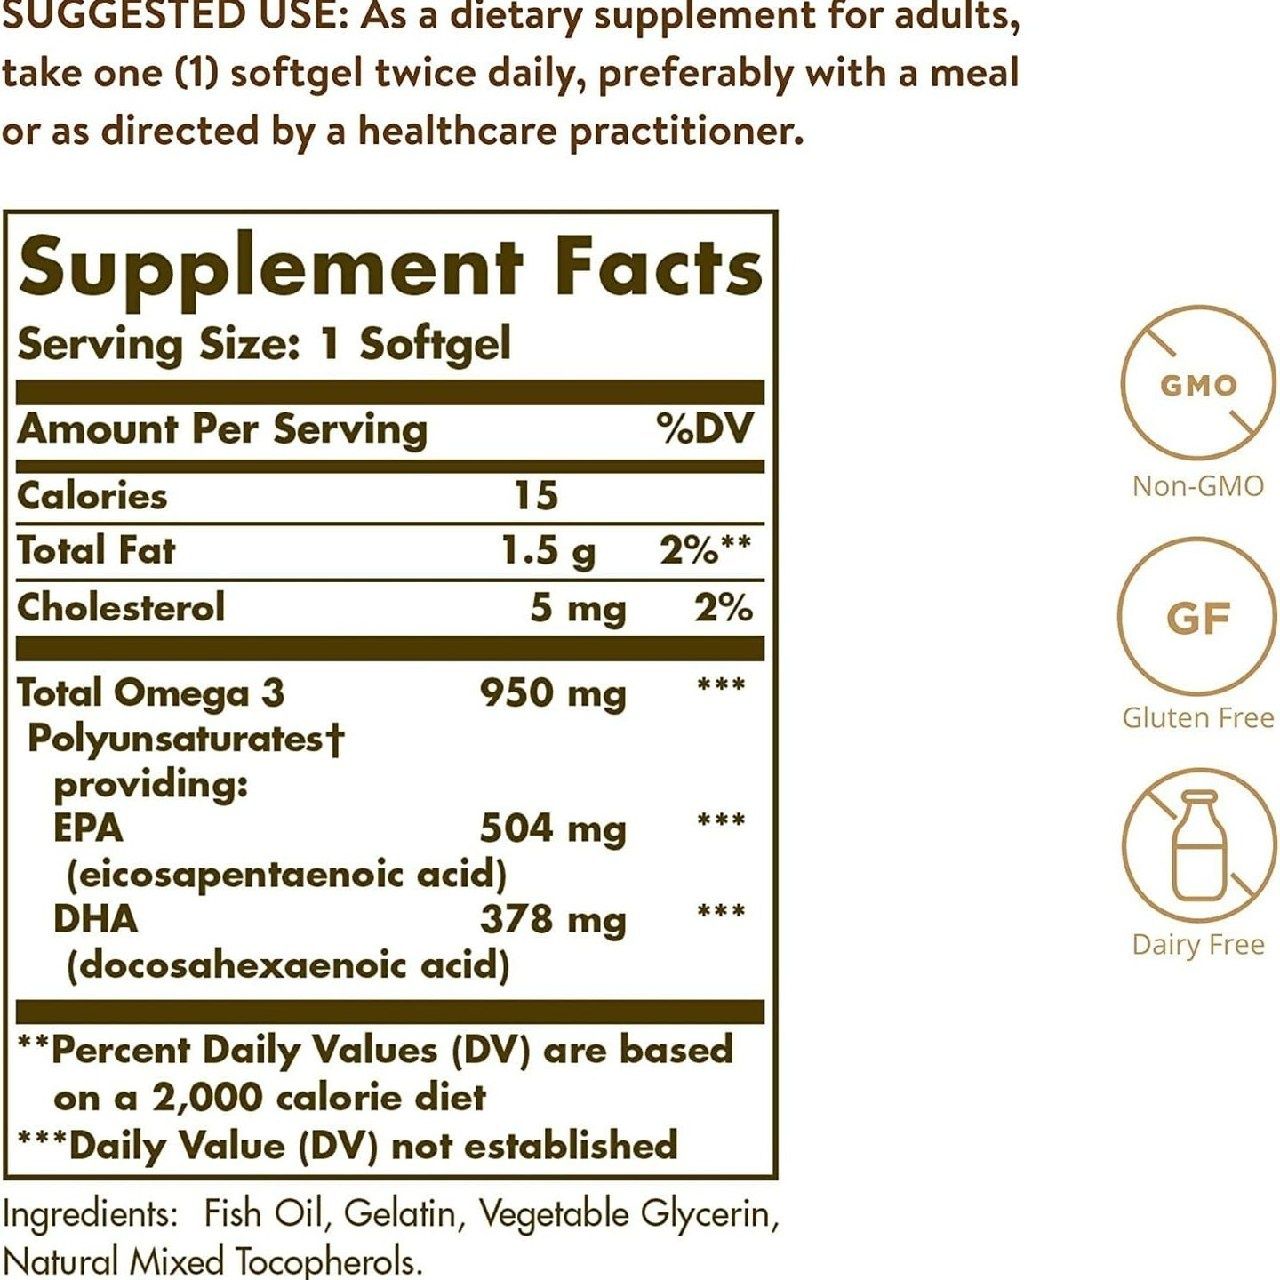 Solgar Triple Strength Omega 3, 950 мг — 100 мягких таблеток, упаковка